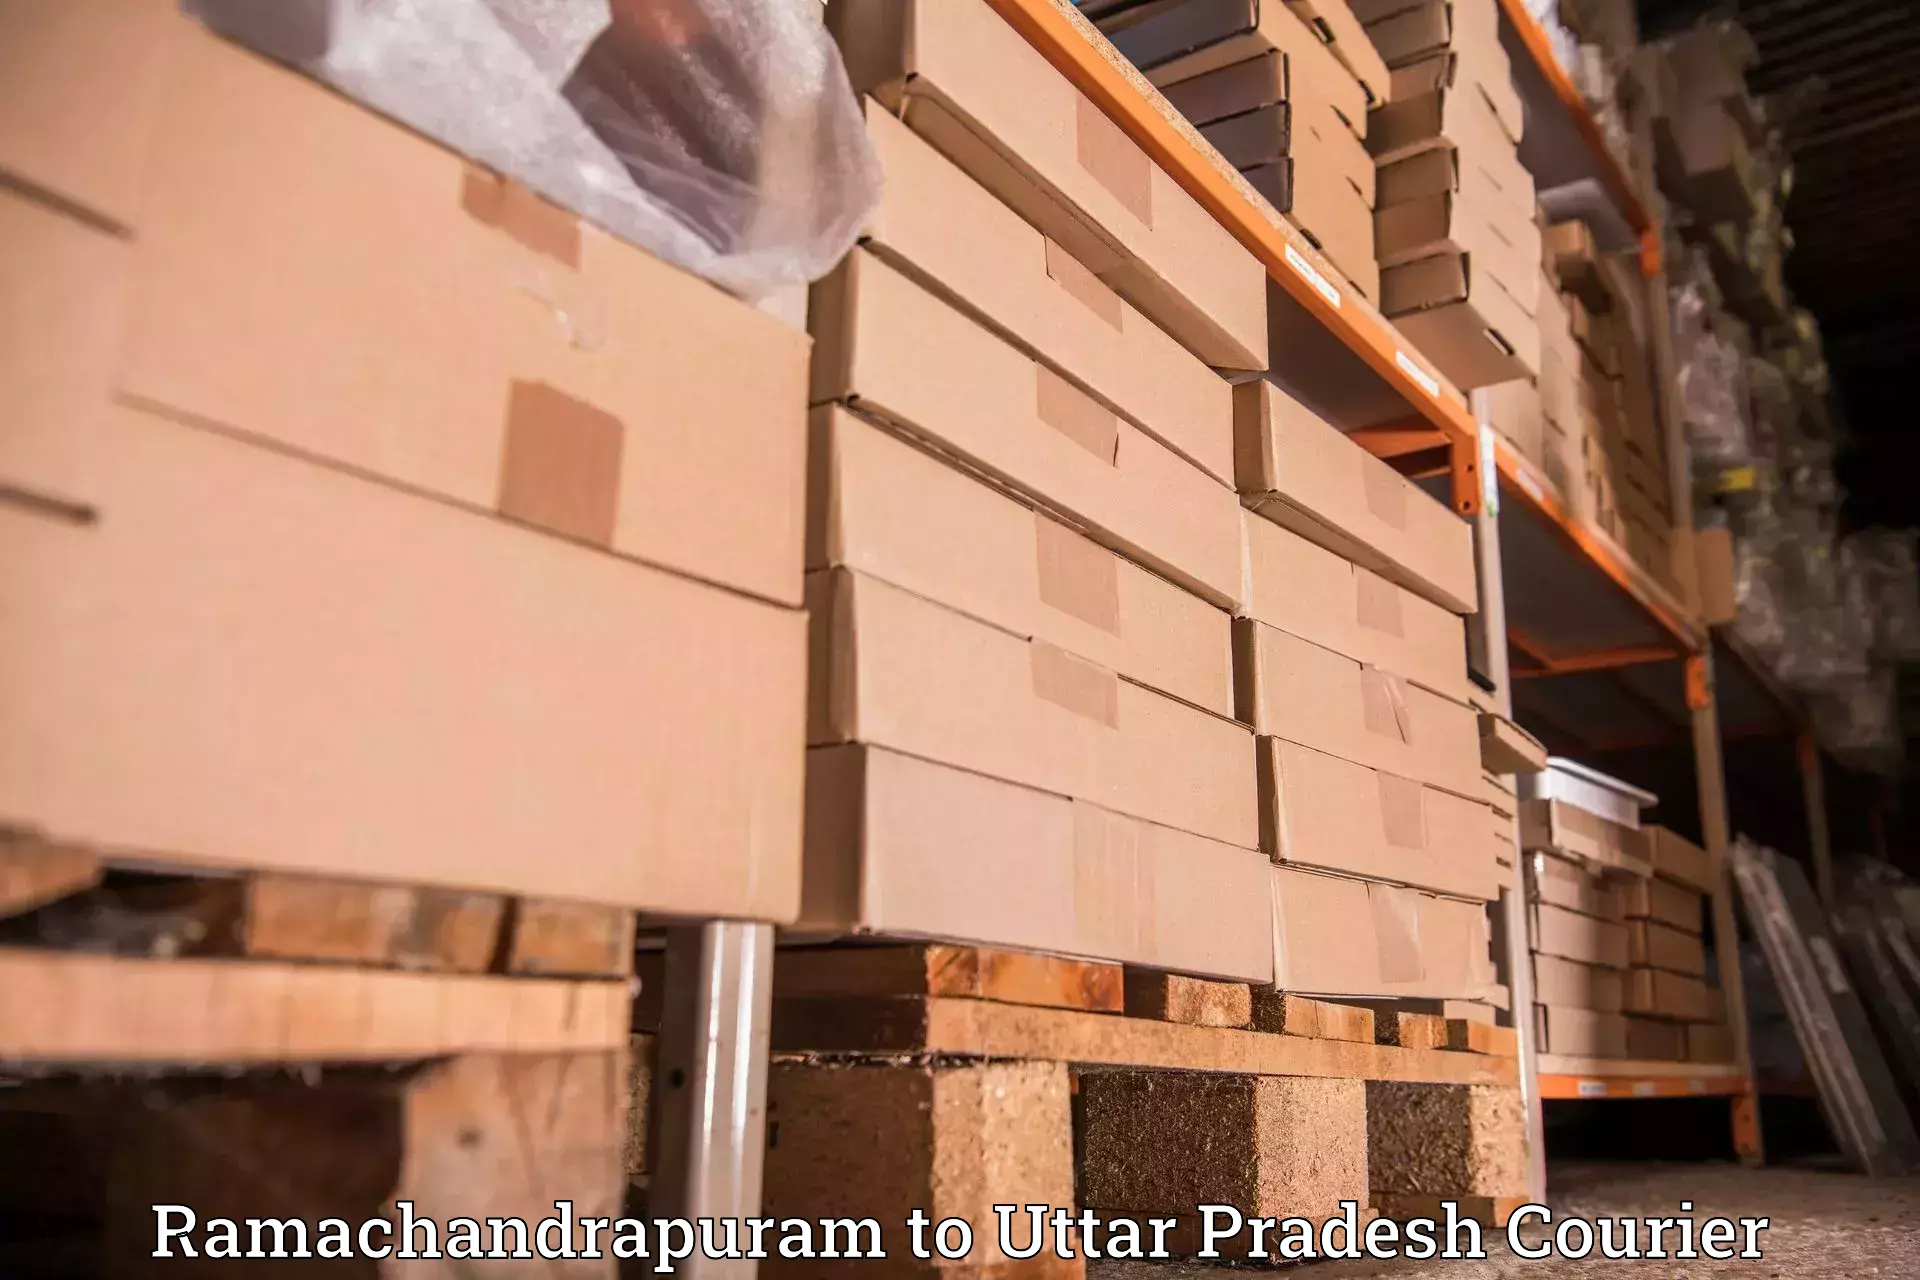 Logistics service provider Ramachandrapuram to Uttar Pradesh